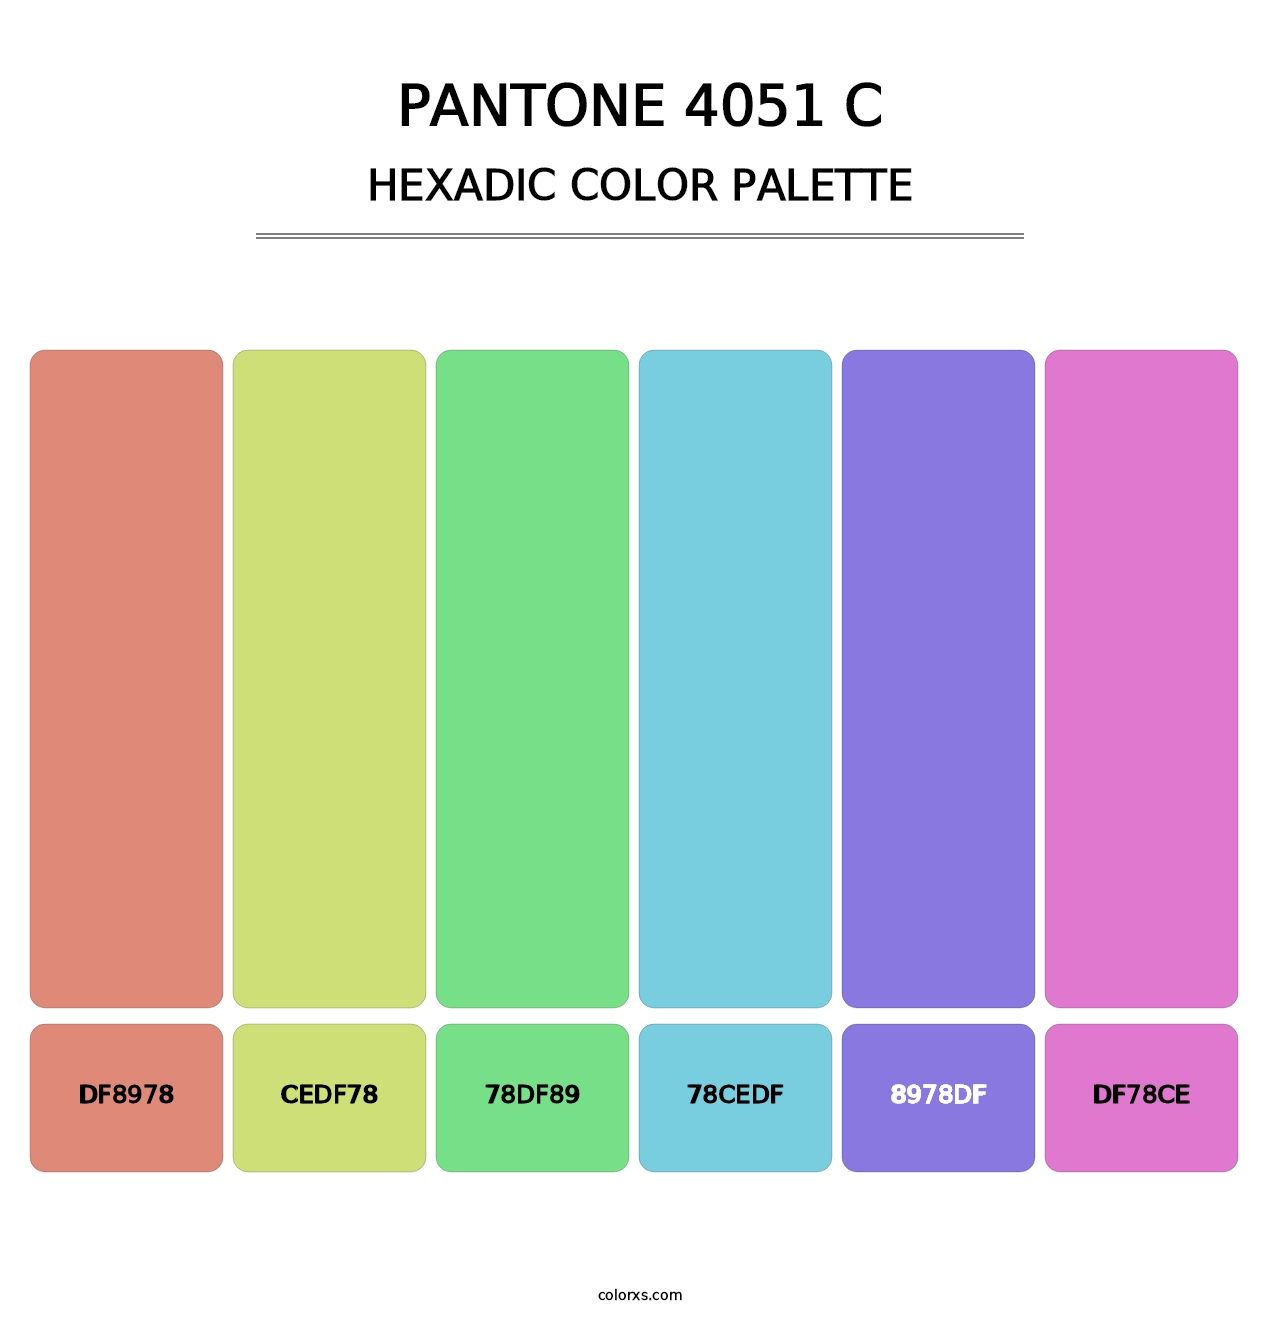 PANTONE 4051 C - Hexadic Color Palette